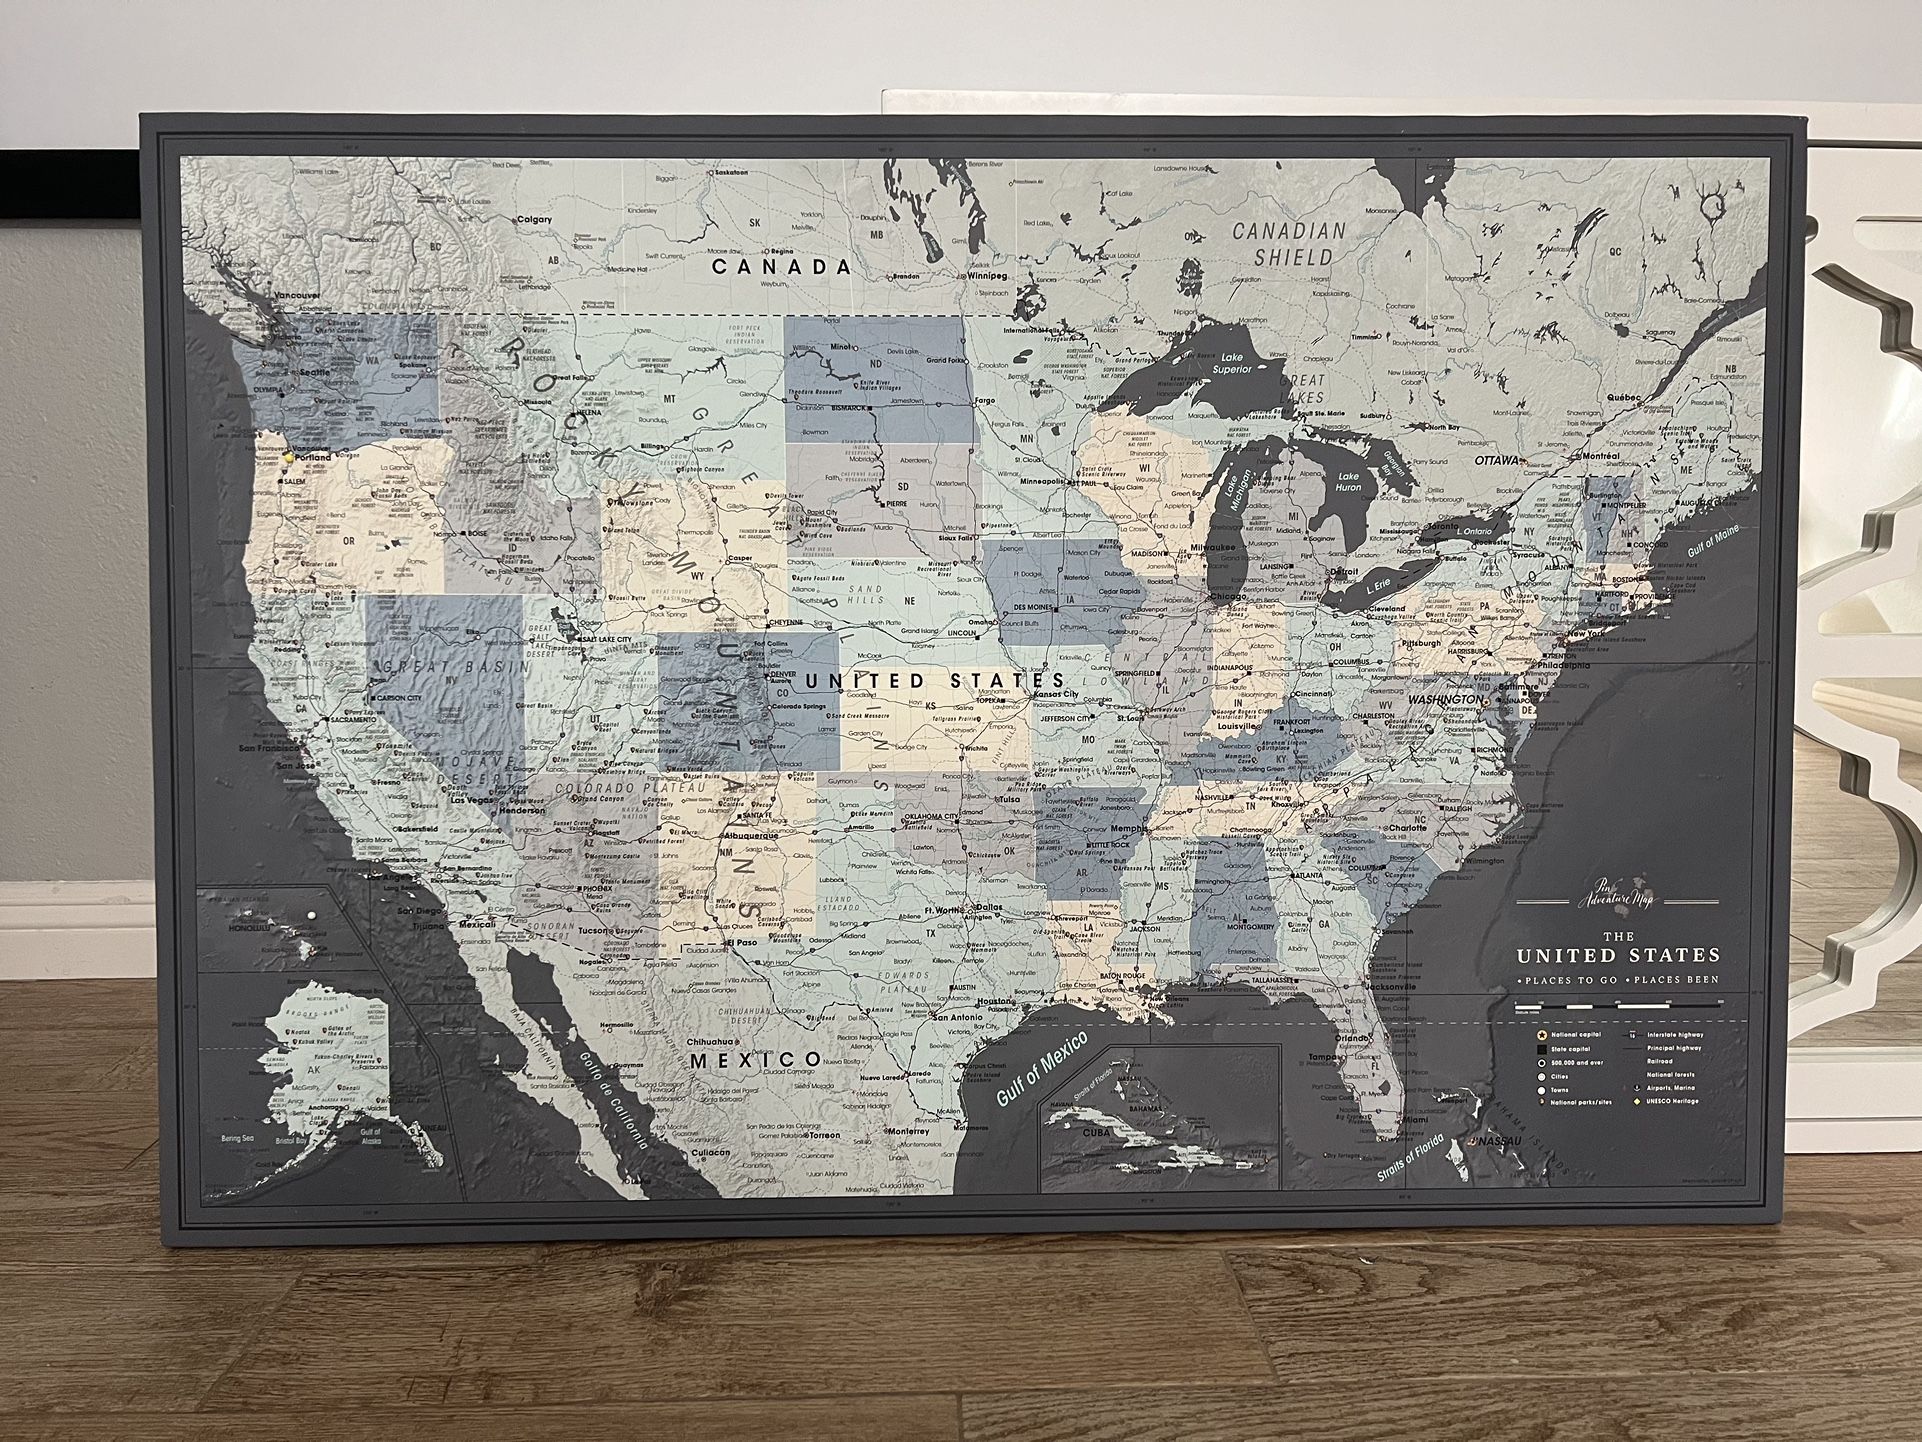 USA pin adventure map